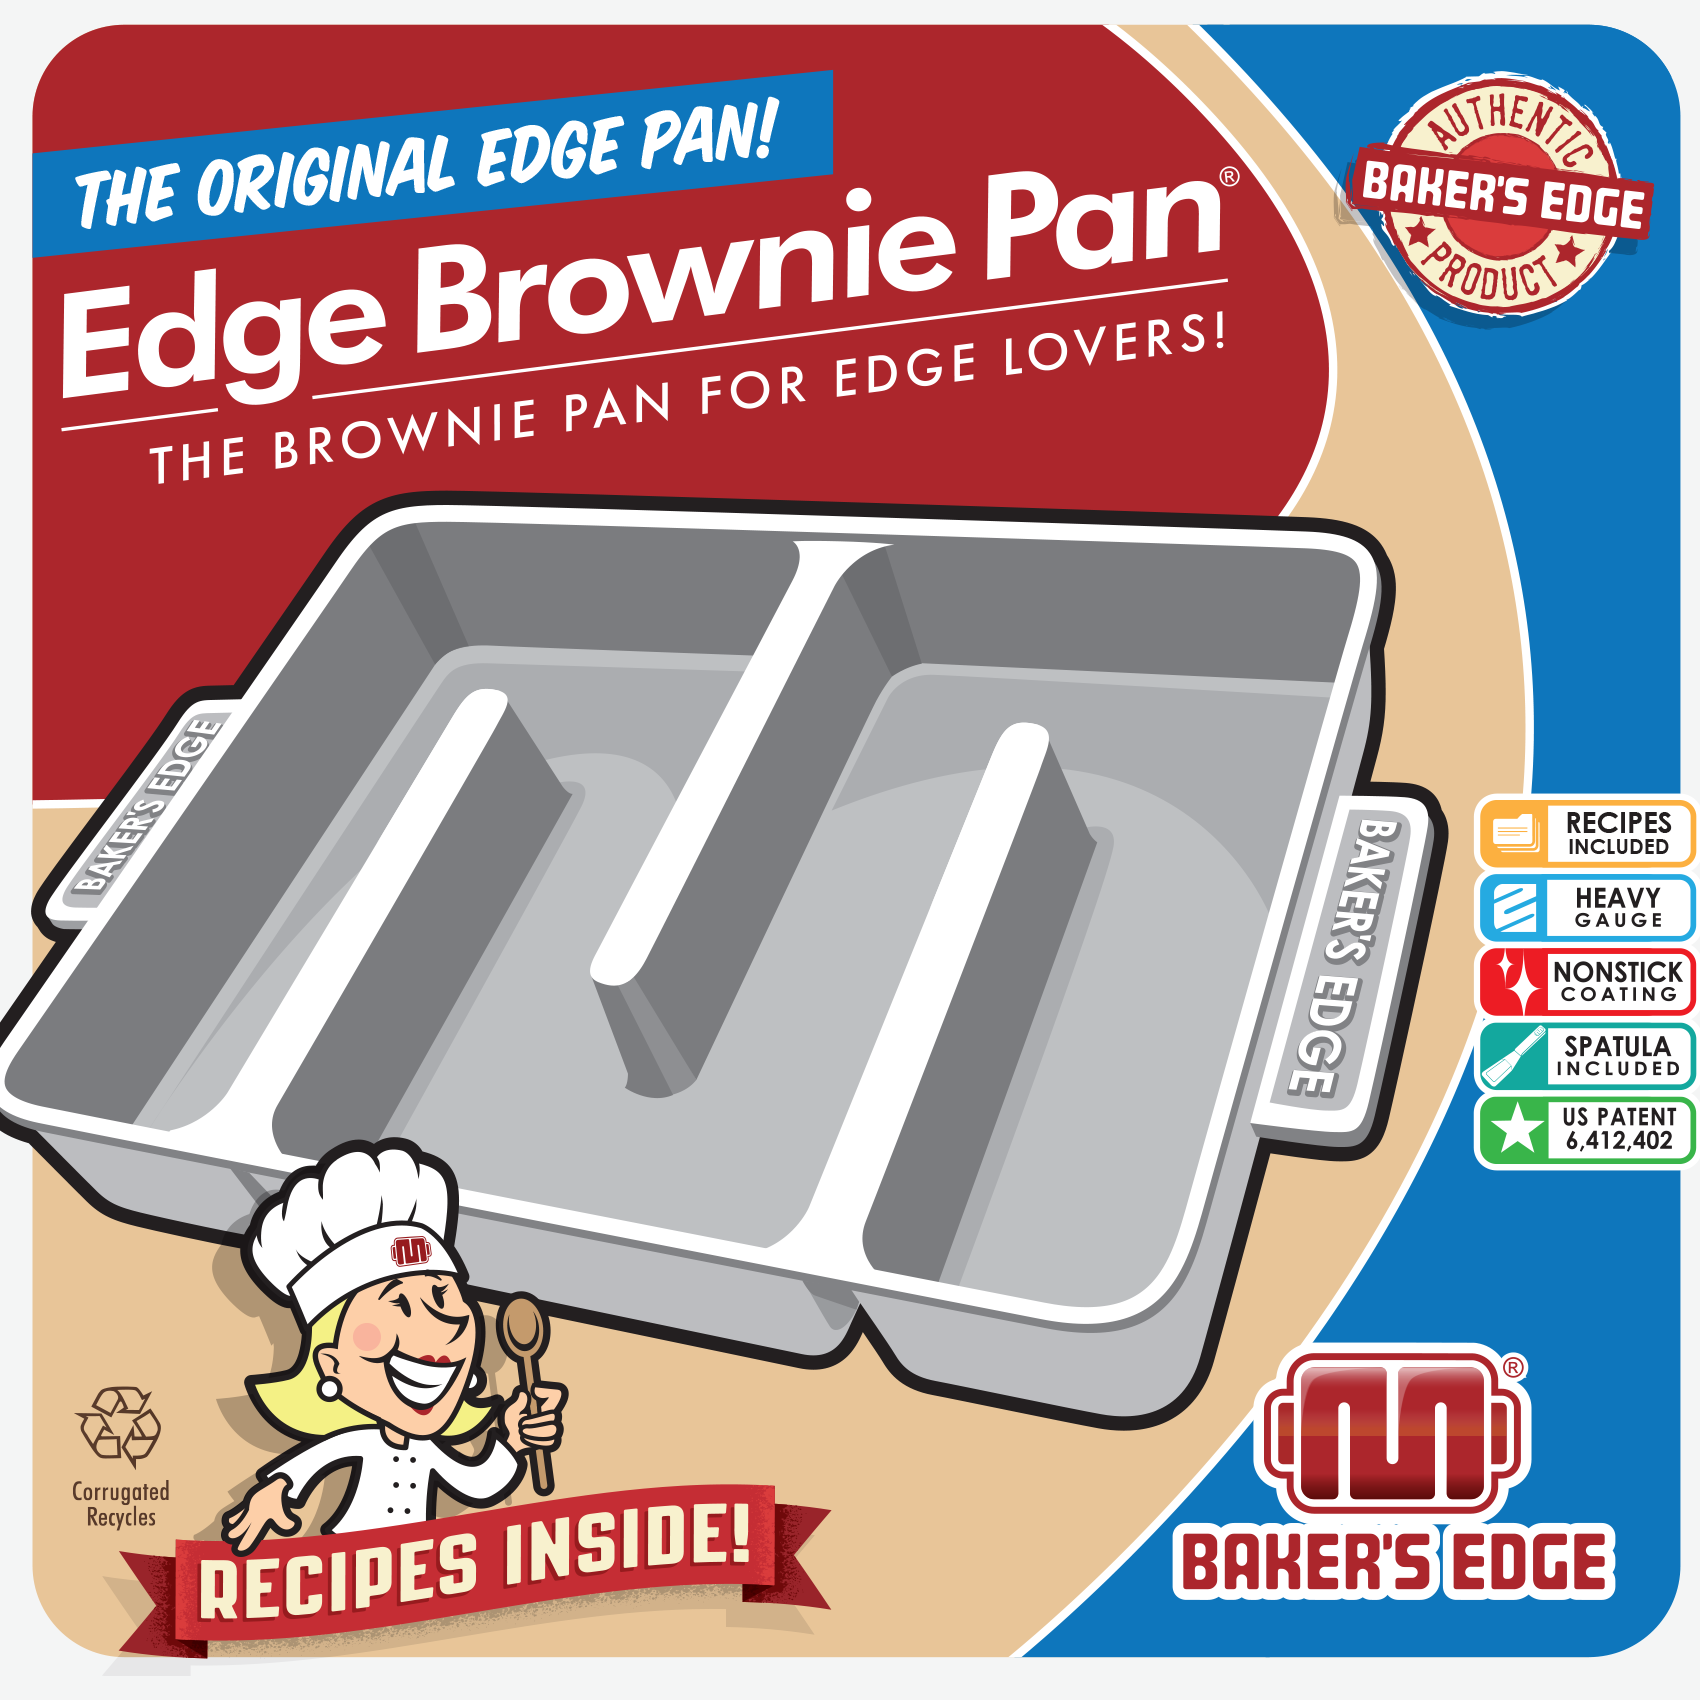 Baker's Edge Brownie Pan, The Original All Edges Brownie Pan for Baking   Premium Doble Nonstick Coating, Heavy Gauge Cast Aluminum Construction,  Rectangular 9x12” Size Baking Pan - US Patented Design: Novelty Cake Pans:  Home  